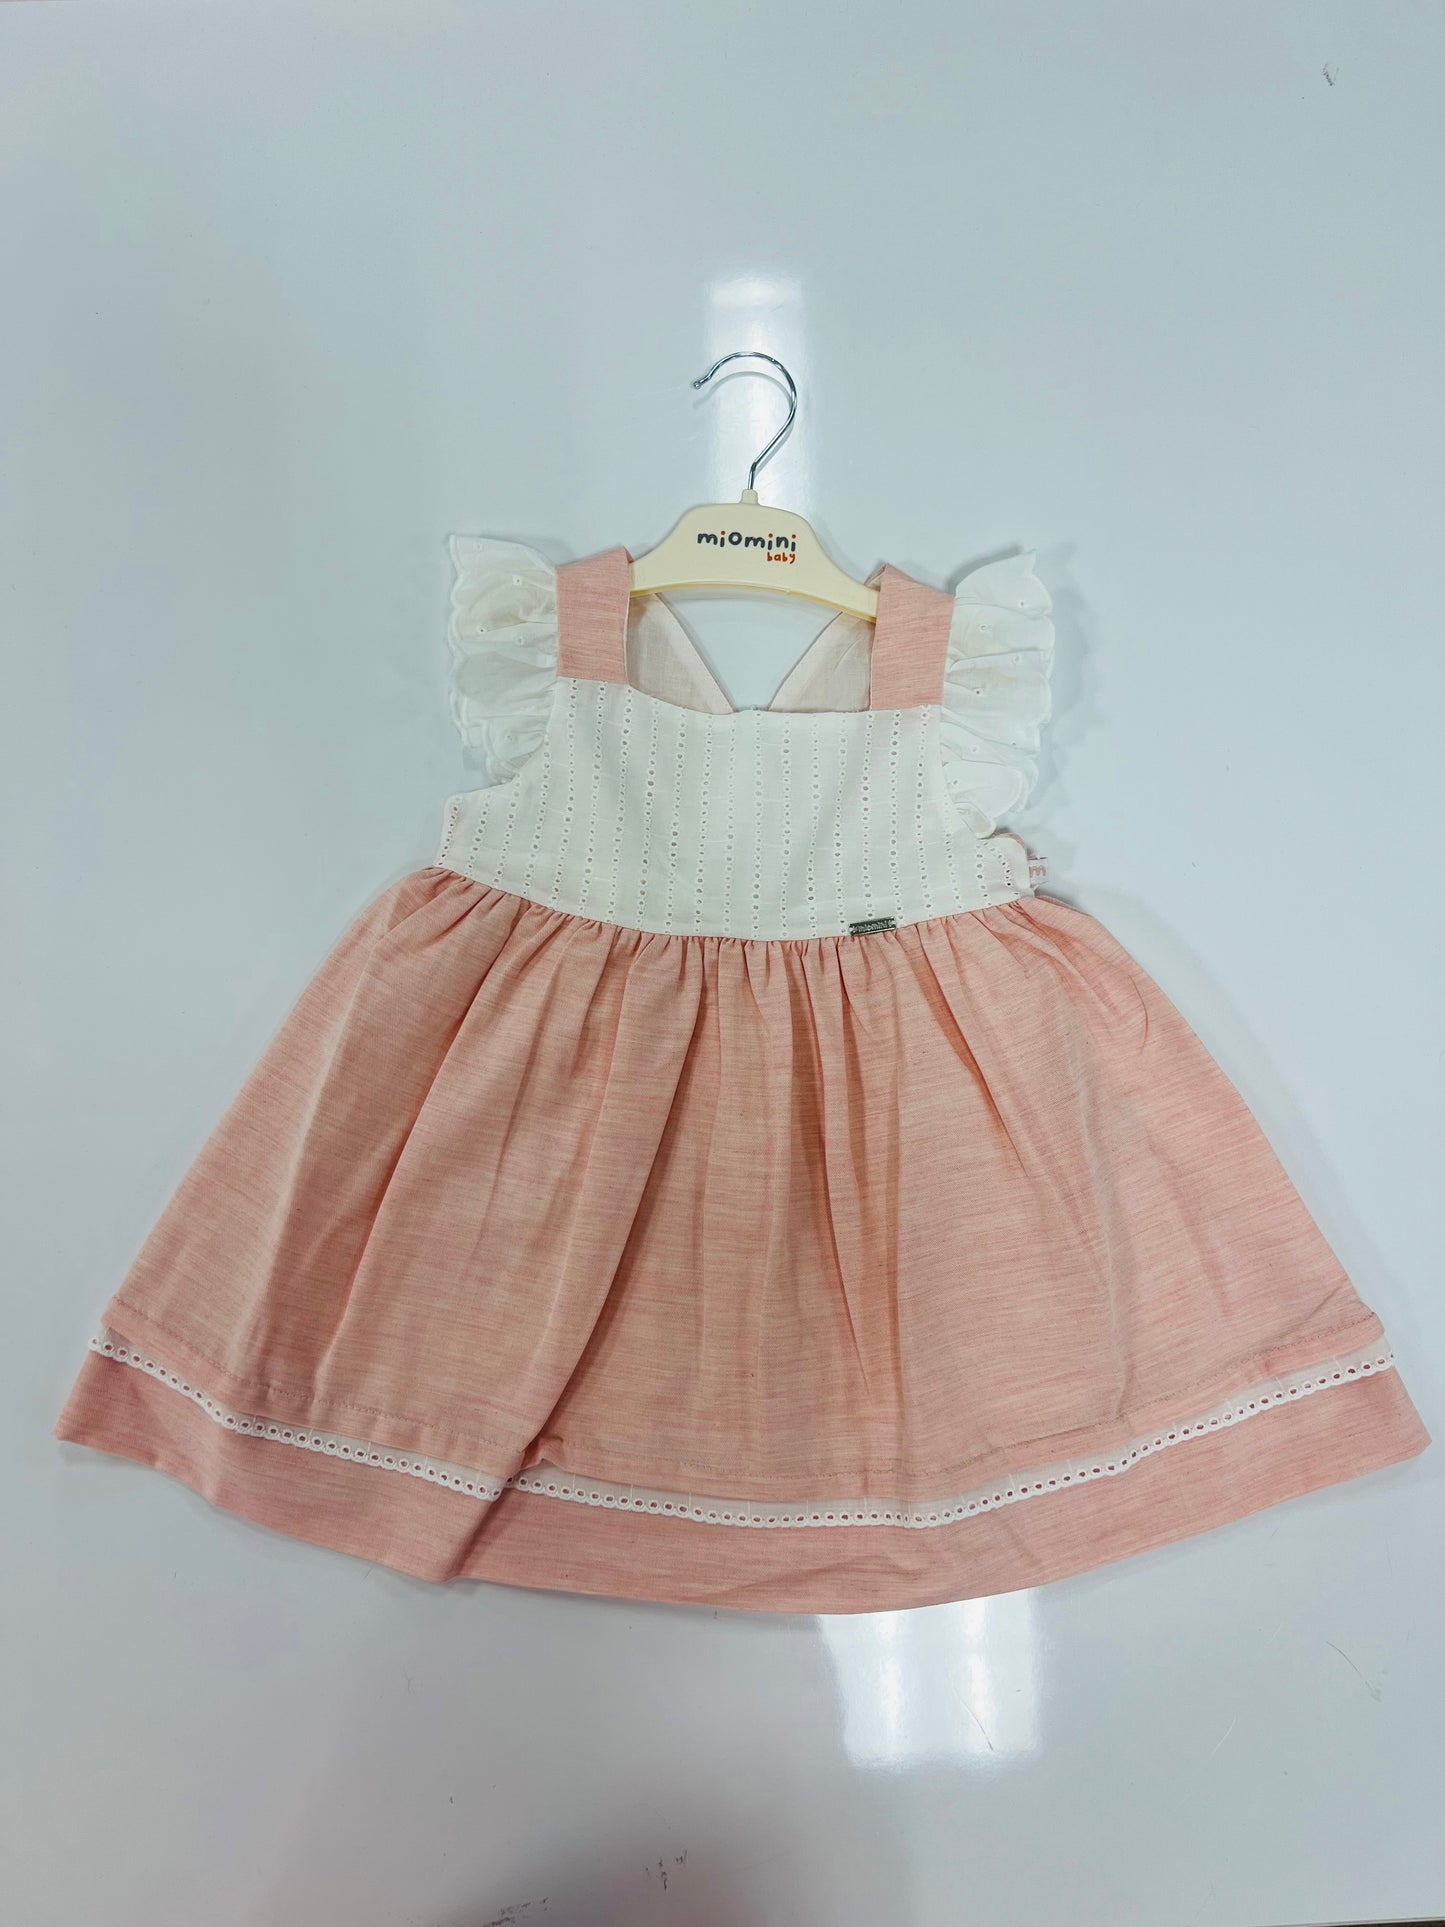 Miomini baby dress 159